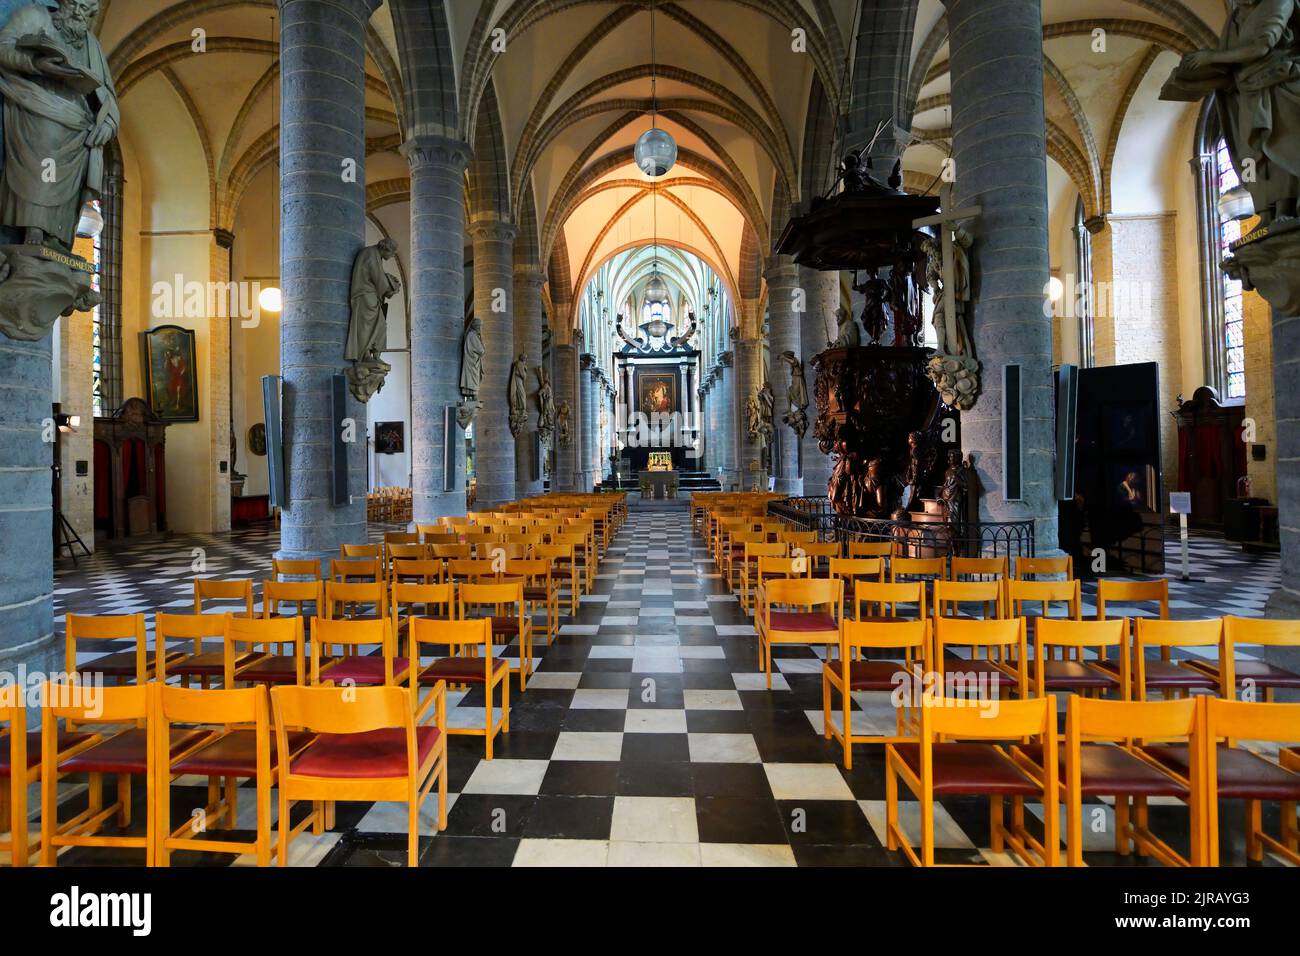 St. Martin’s Church, Central nave and altar, Kortrijk, Belgium Stock Photo